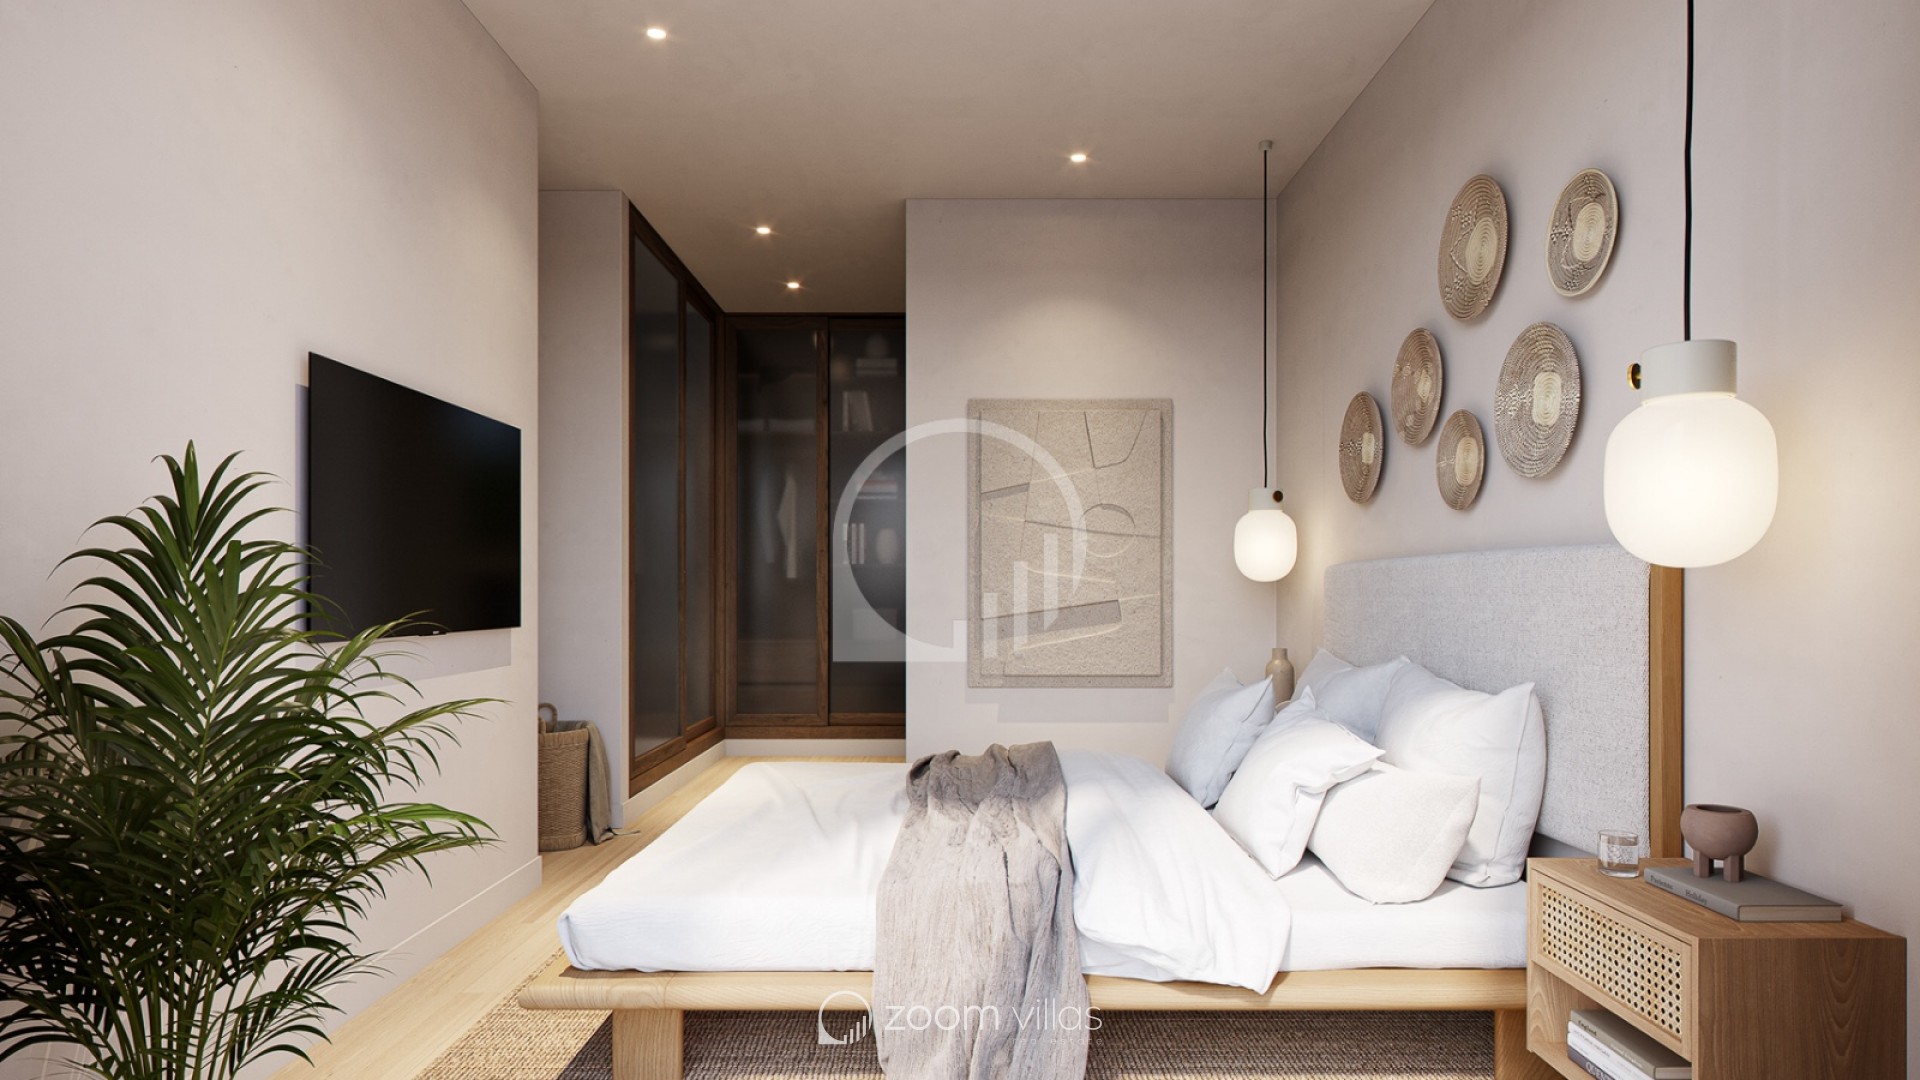 Villa te koop in Moraira met mooie slaapkamer | Zoom Villas